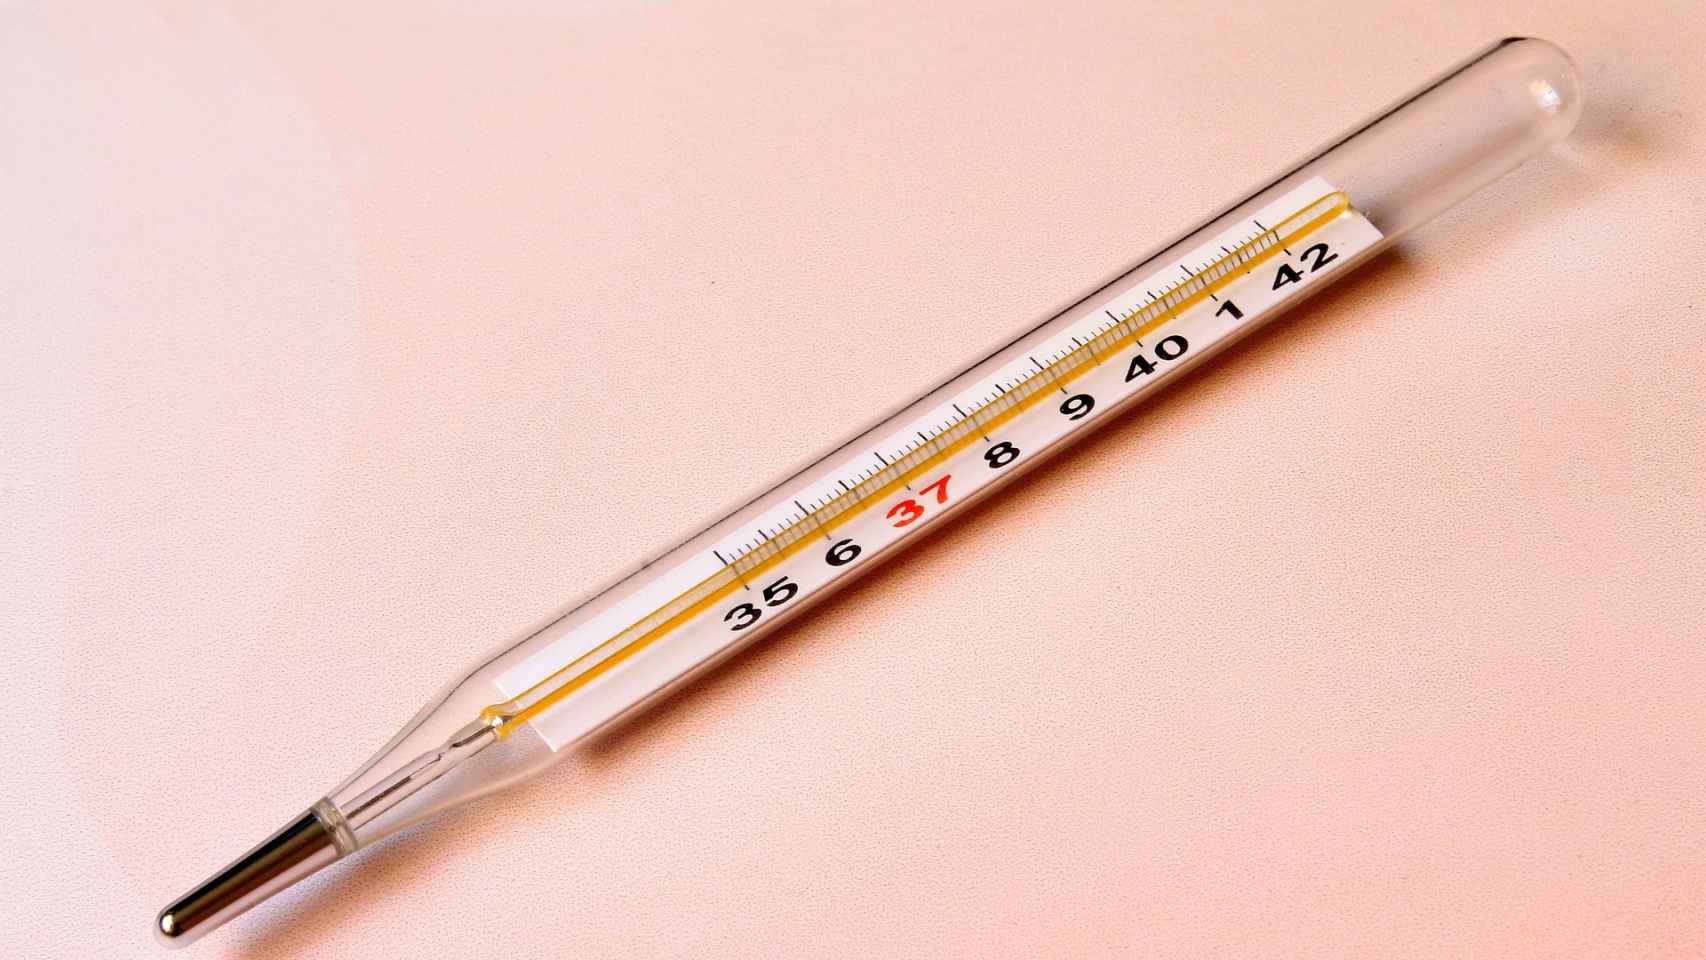 Un termómetro clásico de mercurio.